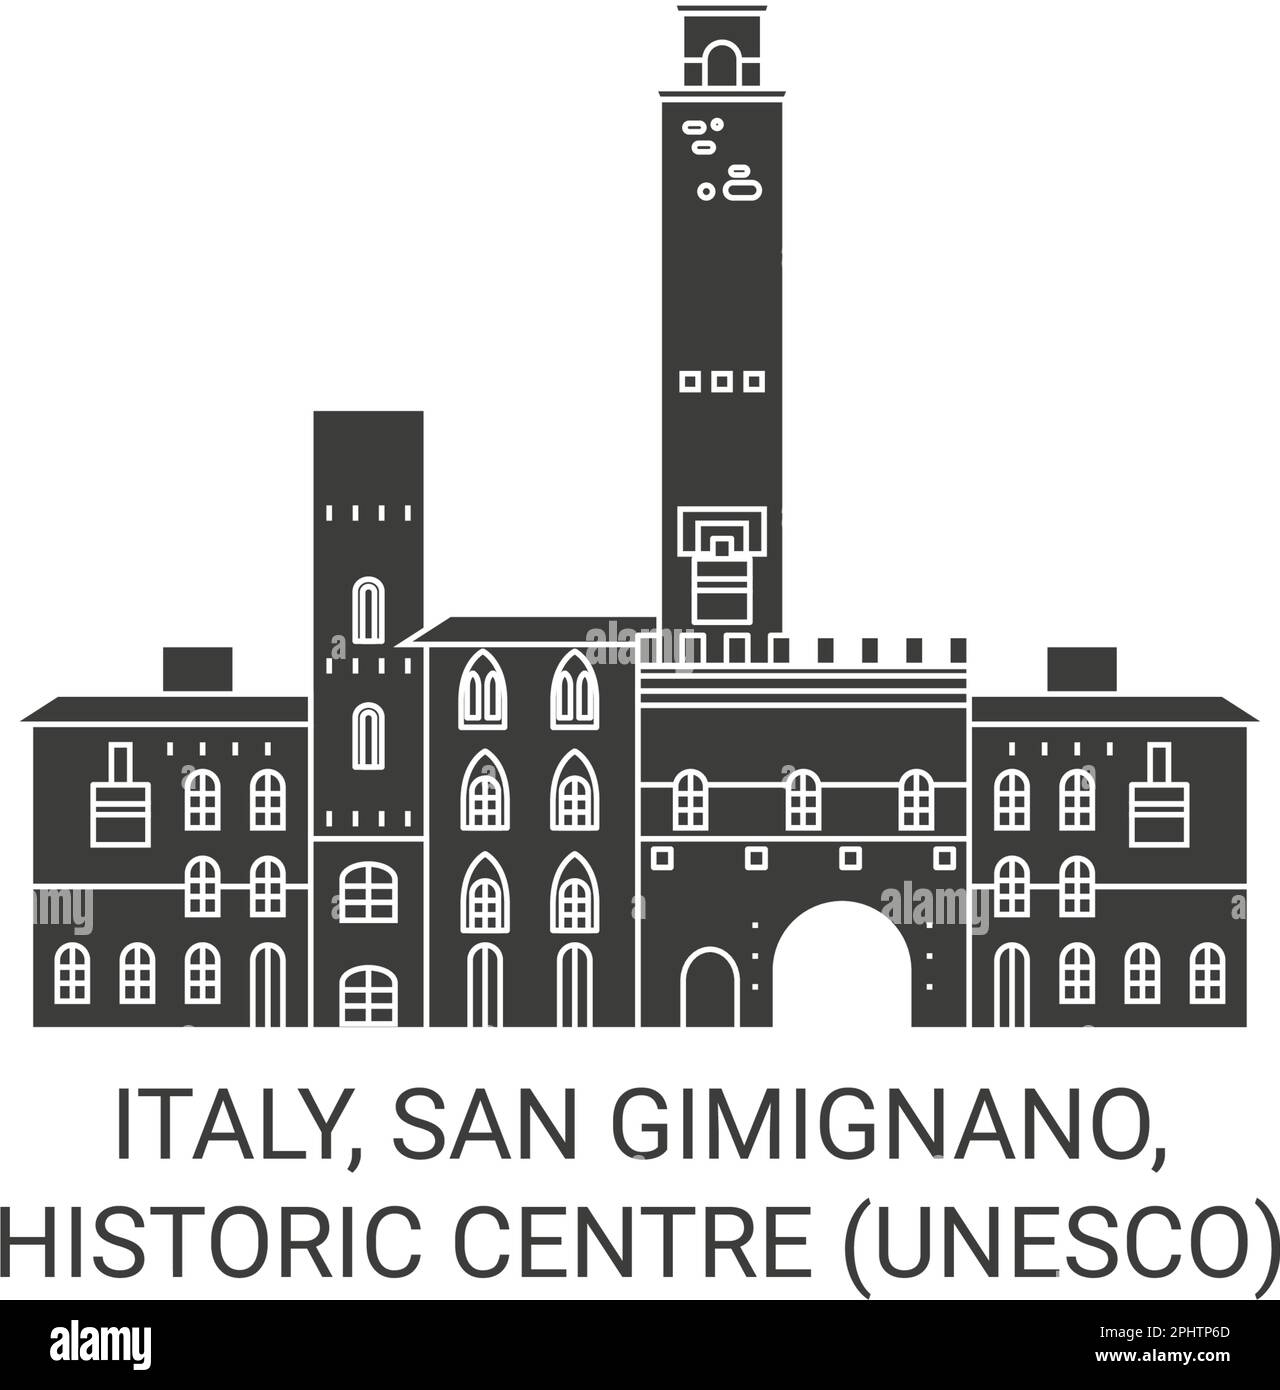 Italy, San Gimignano., Historic Centre Unesco travel landmark vector illustration Stock Vector